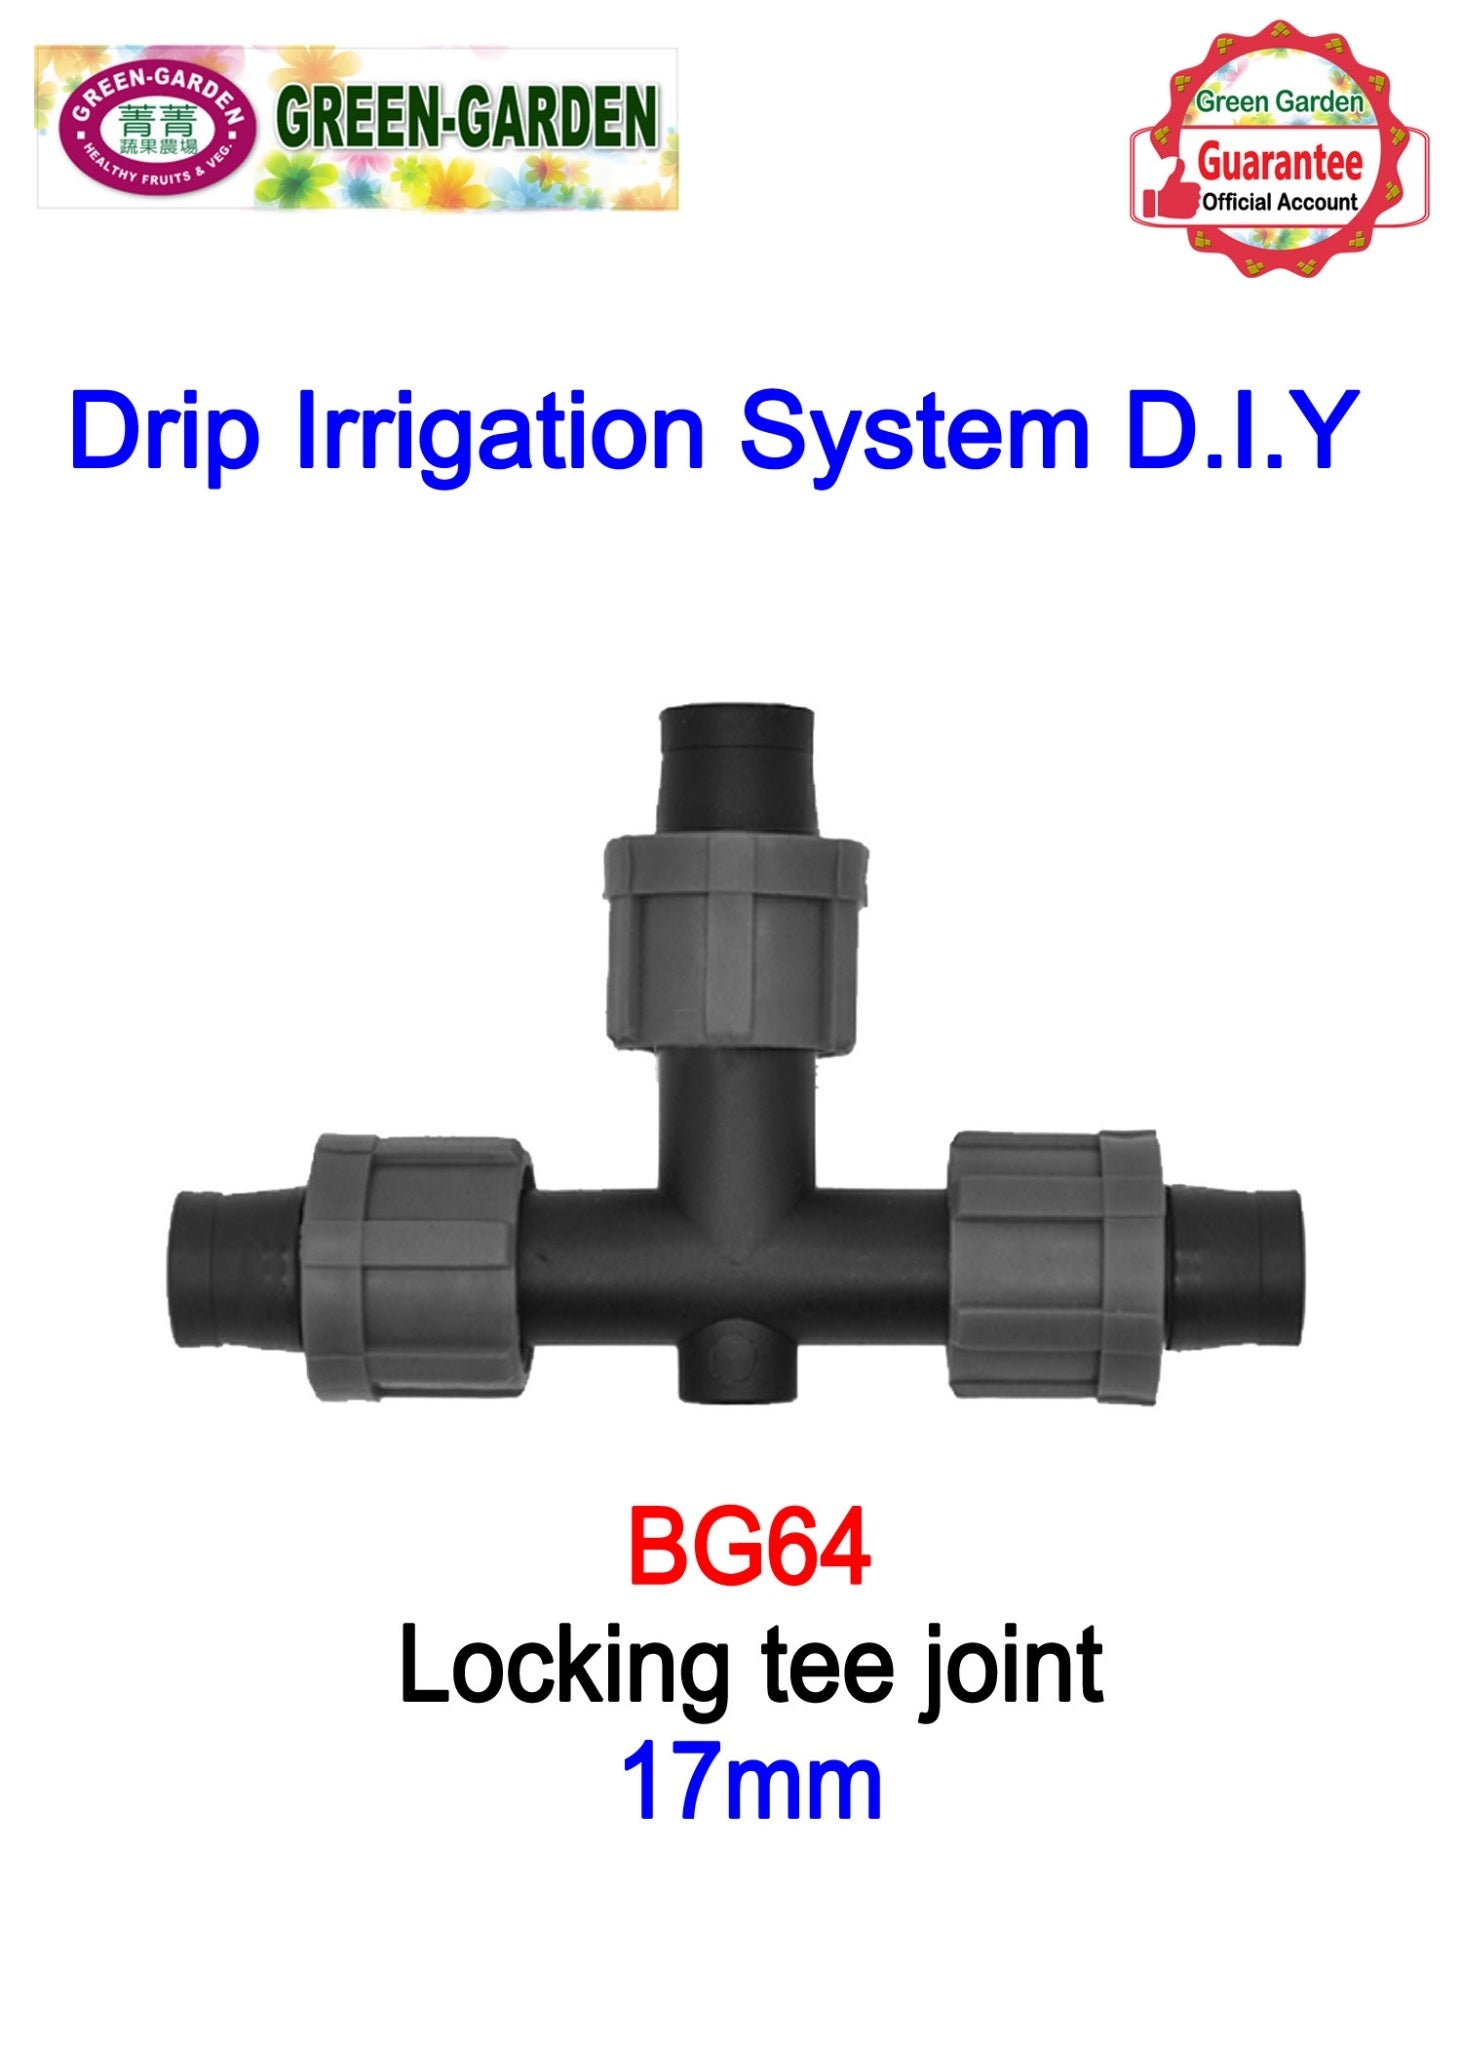 Drip Irrigation System - 17mm lock tee joint BG64